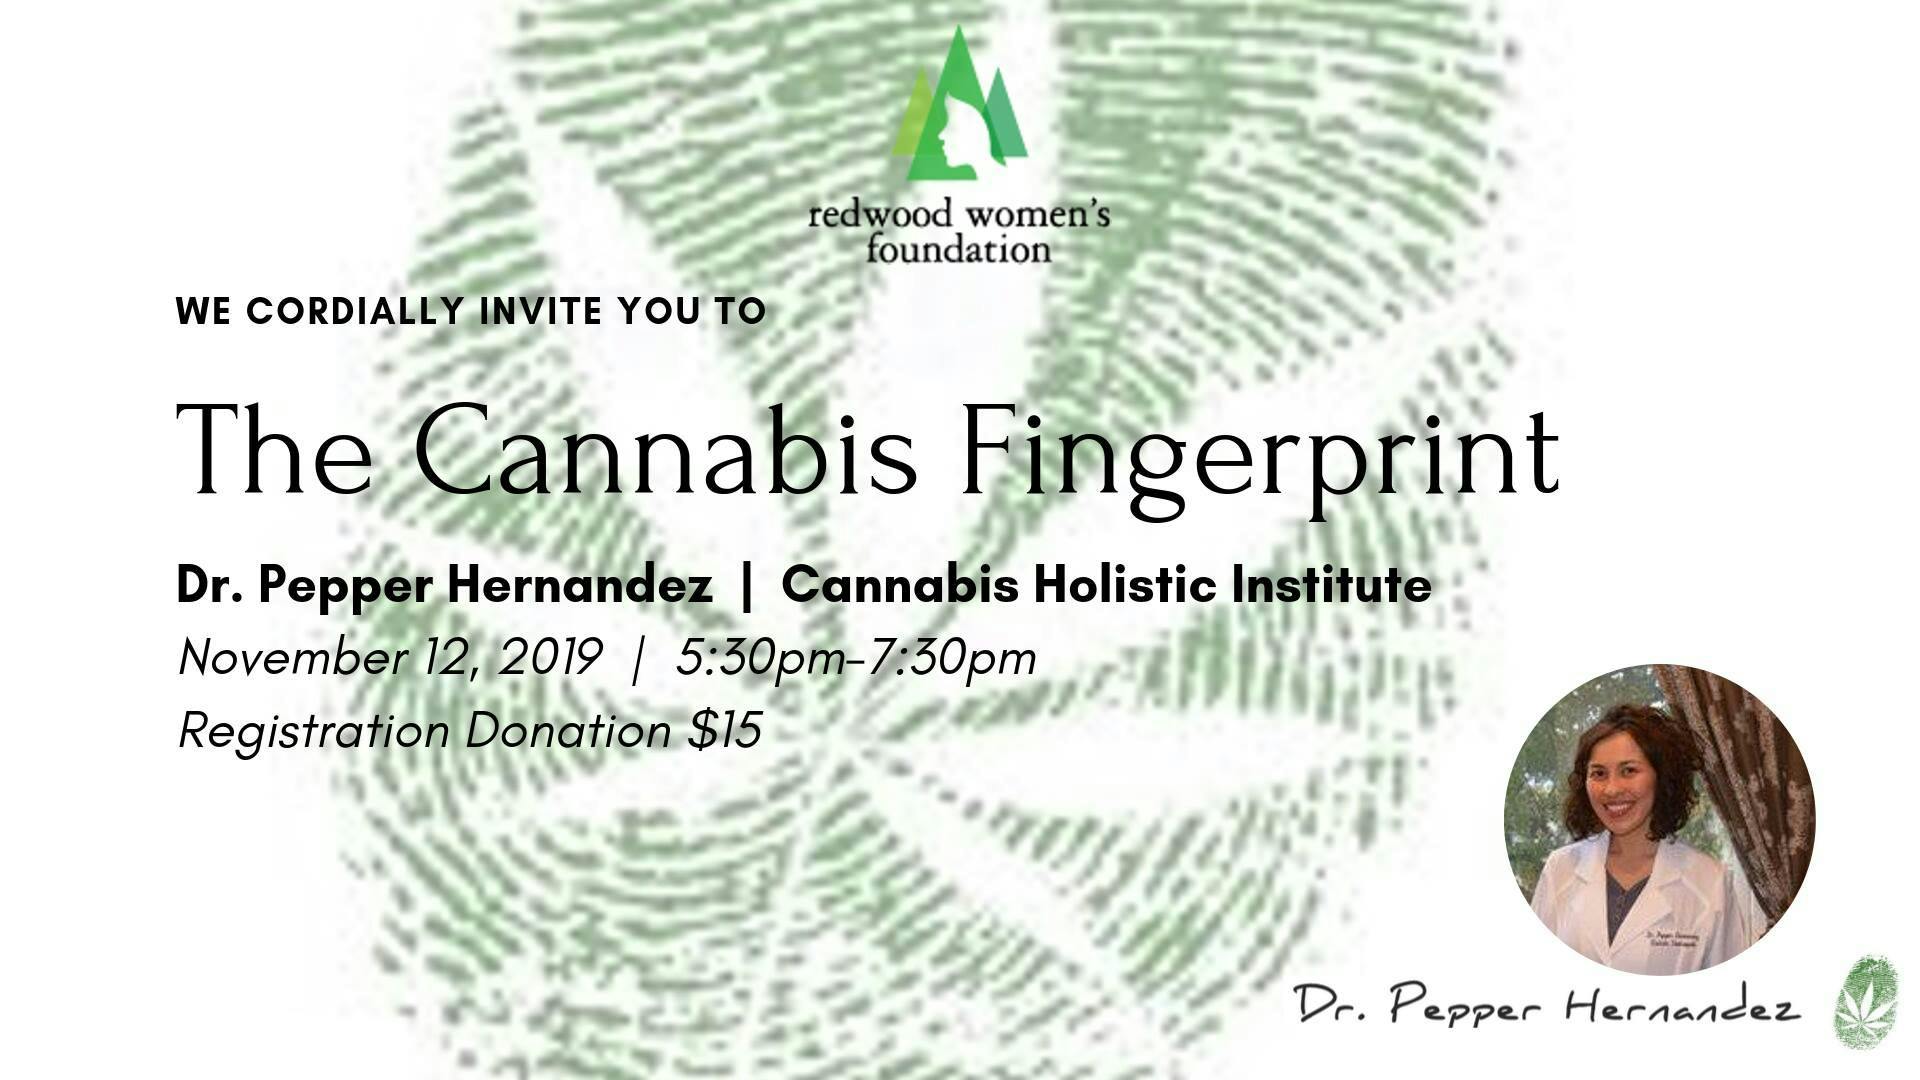 The Cannabis Fingerprint